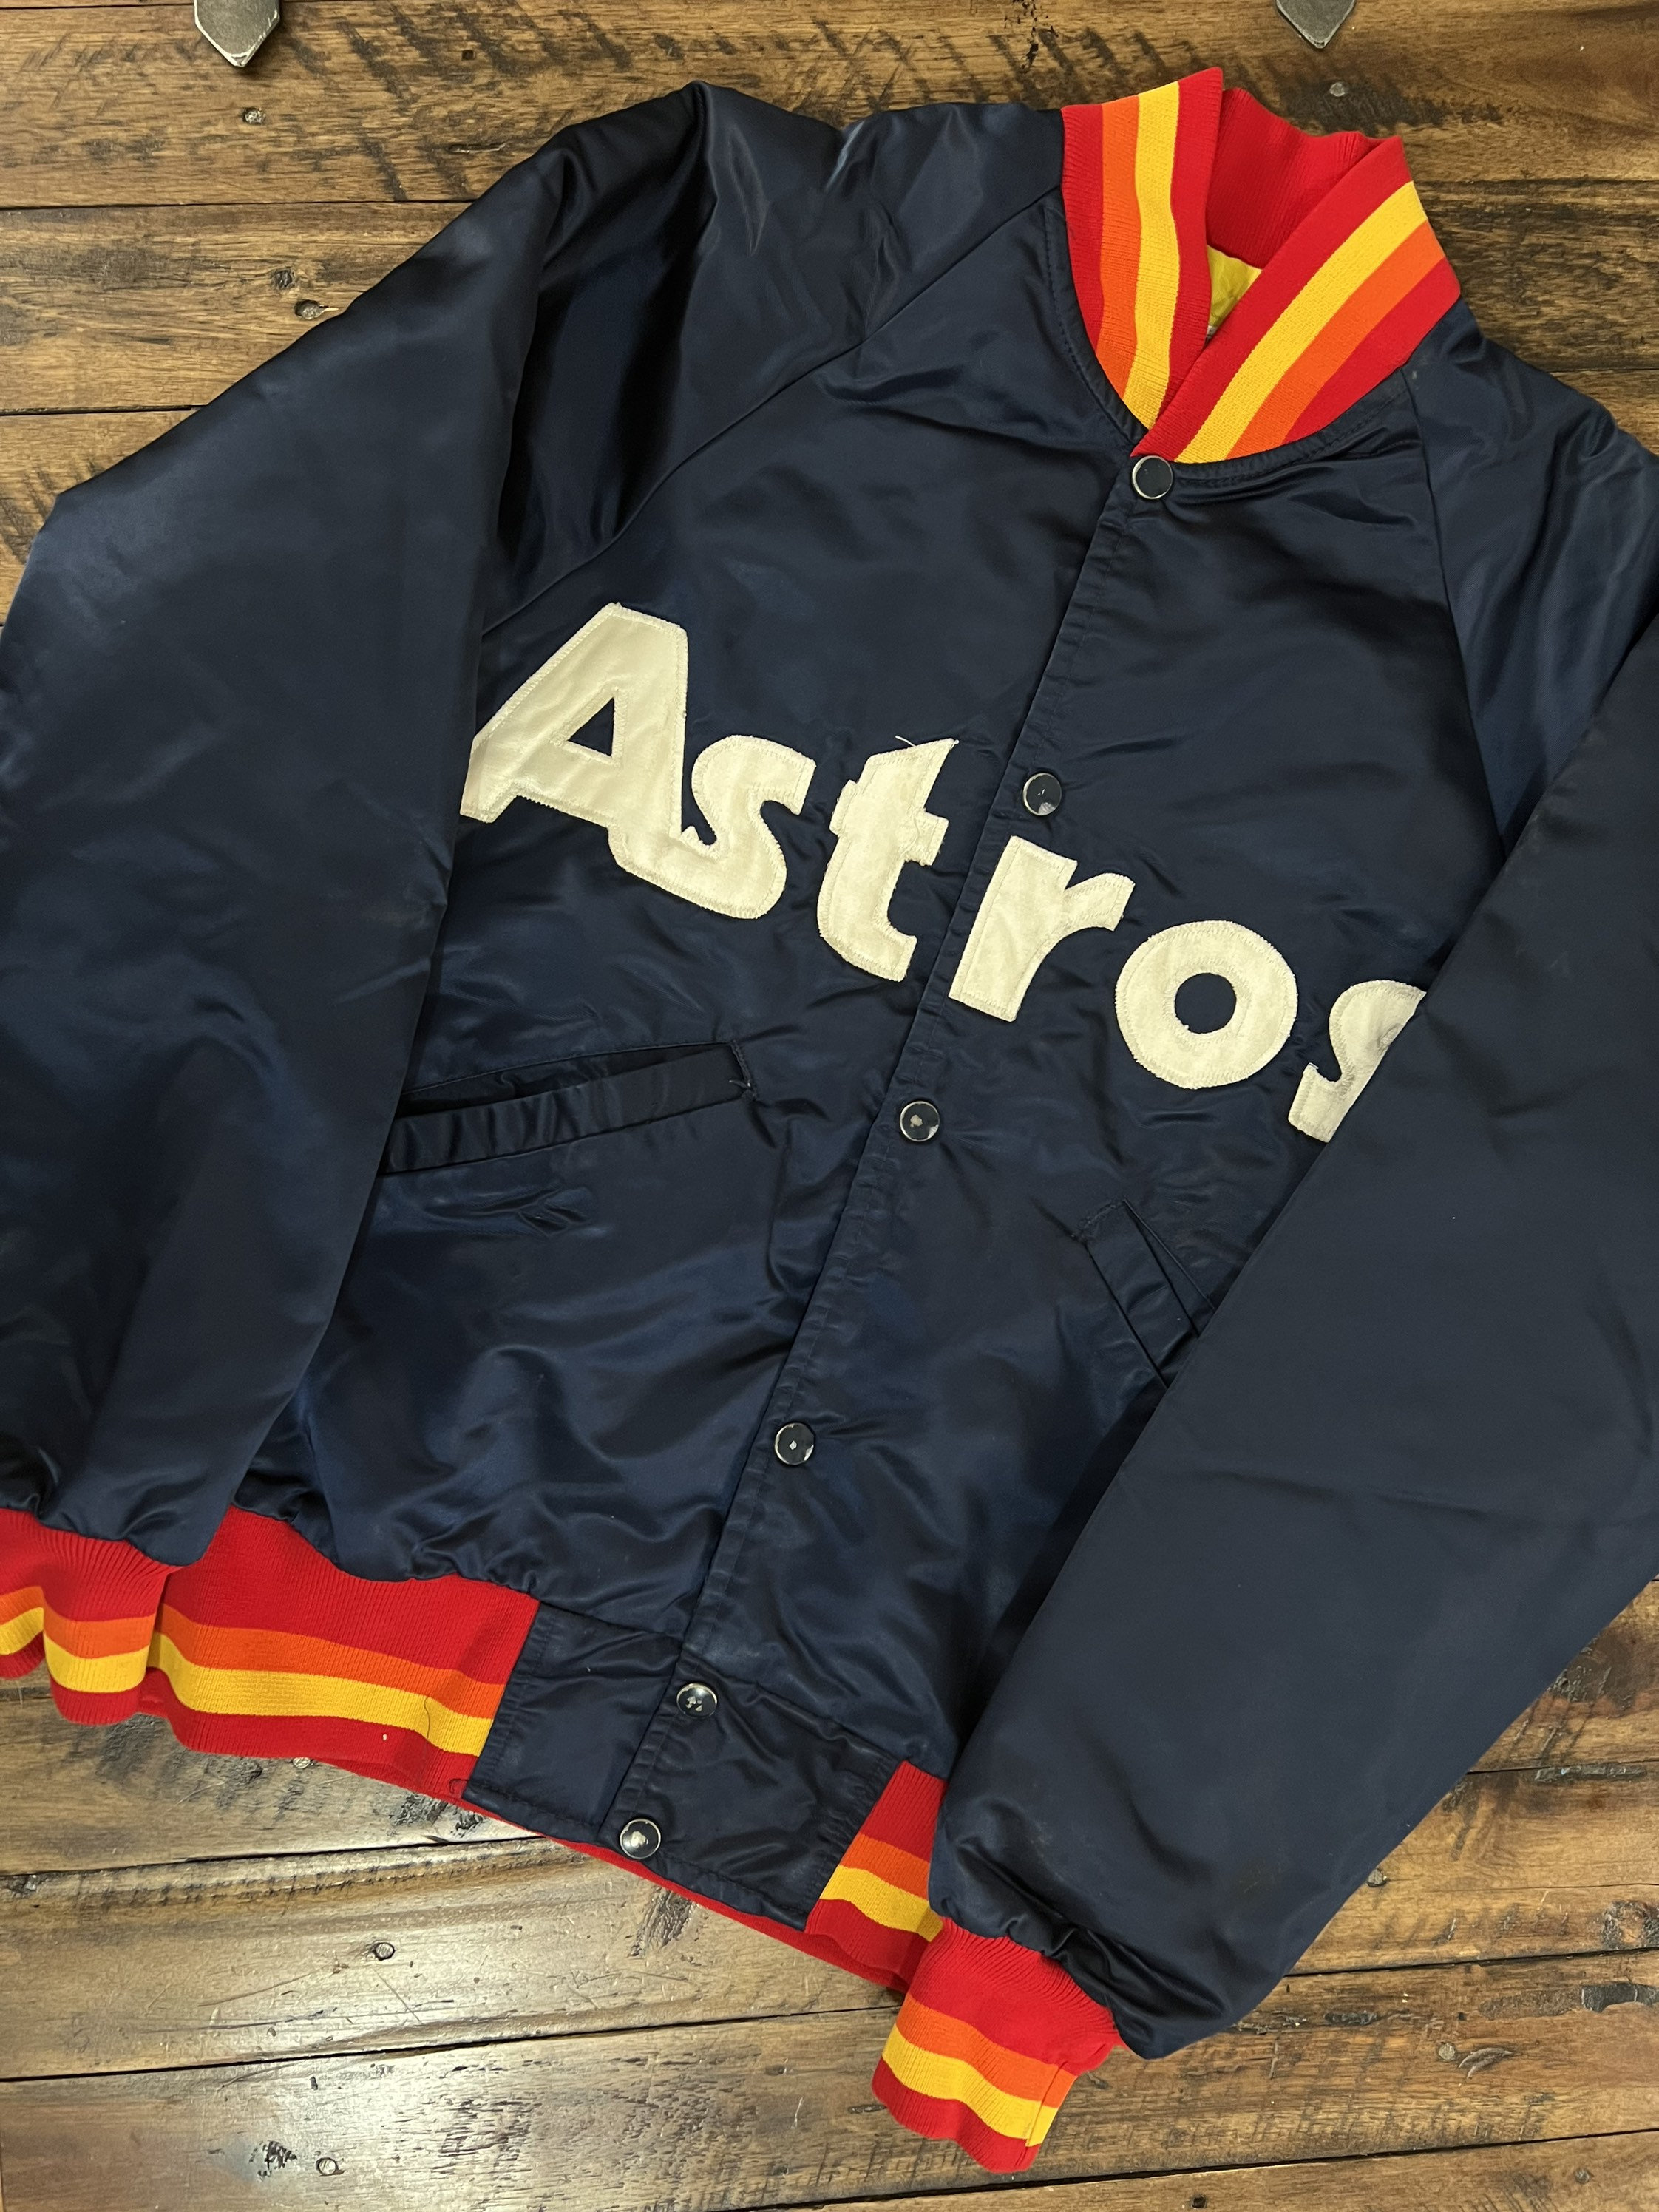 Vintage 80s Houston Astros Lightweight Starter Bomber Jacket 